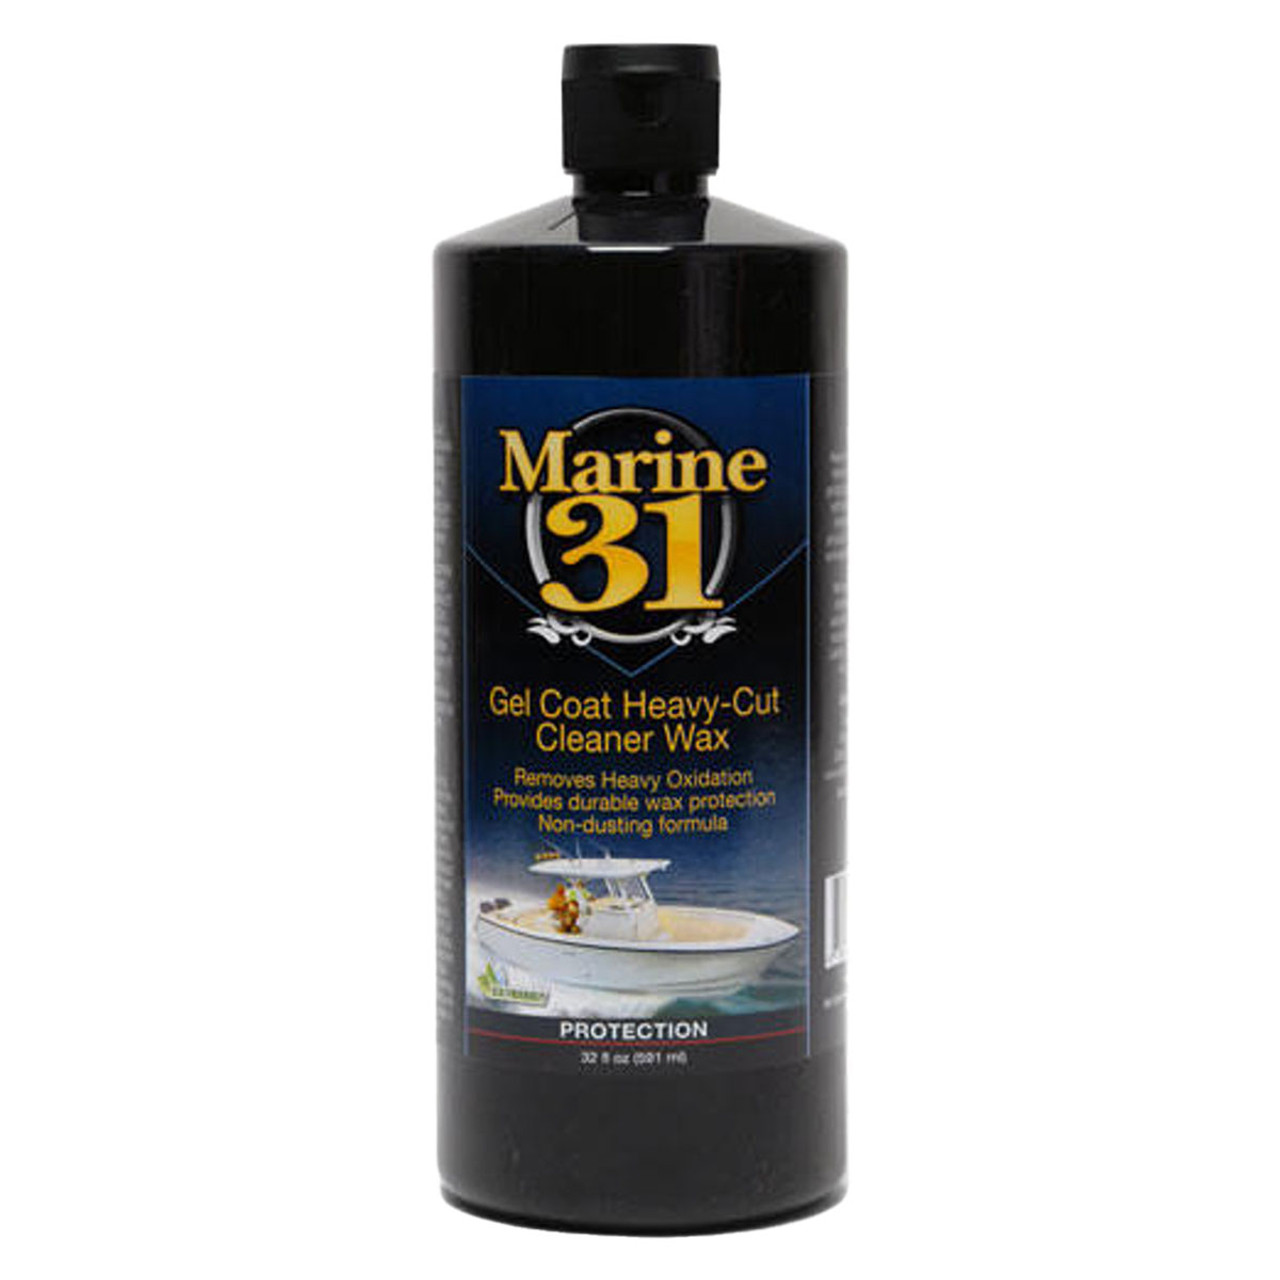 Marine 31 Gel Coat Heavy-Cut Cleaner Wax 32 oz.